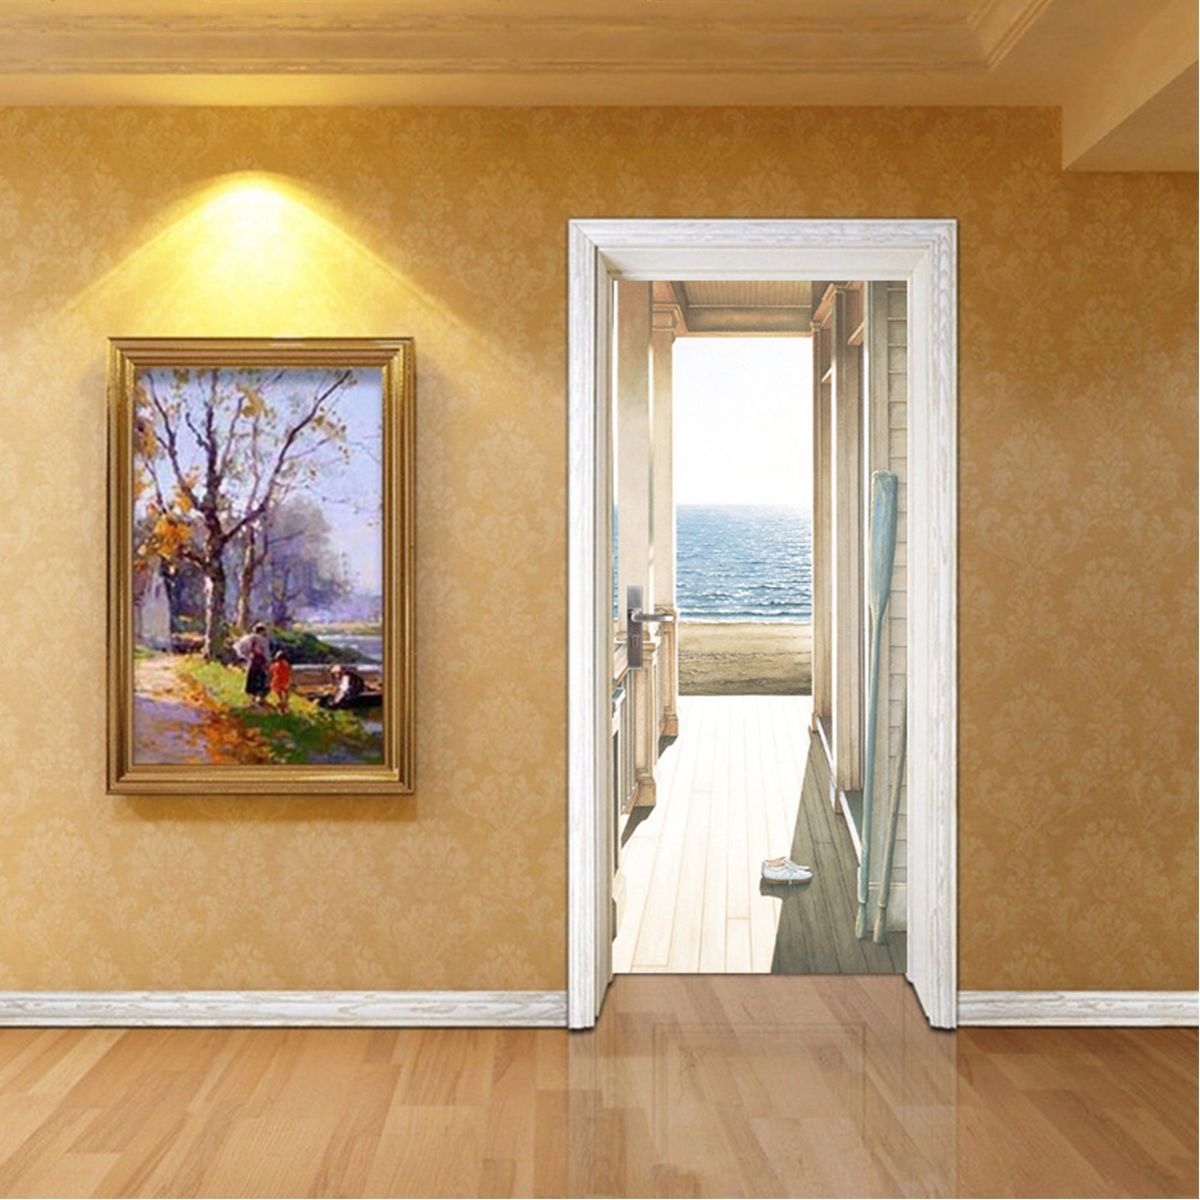 2Pcs-385x200cm-3D-Door-Wallpaper-Sticker-Mural-Scene-Self-Adhesive-Decor-Decal-1714764